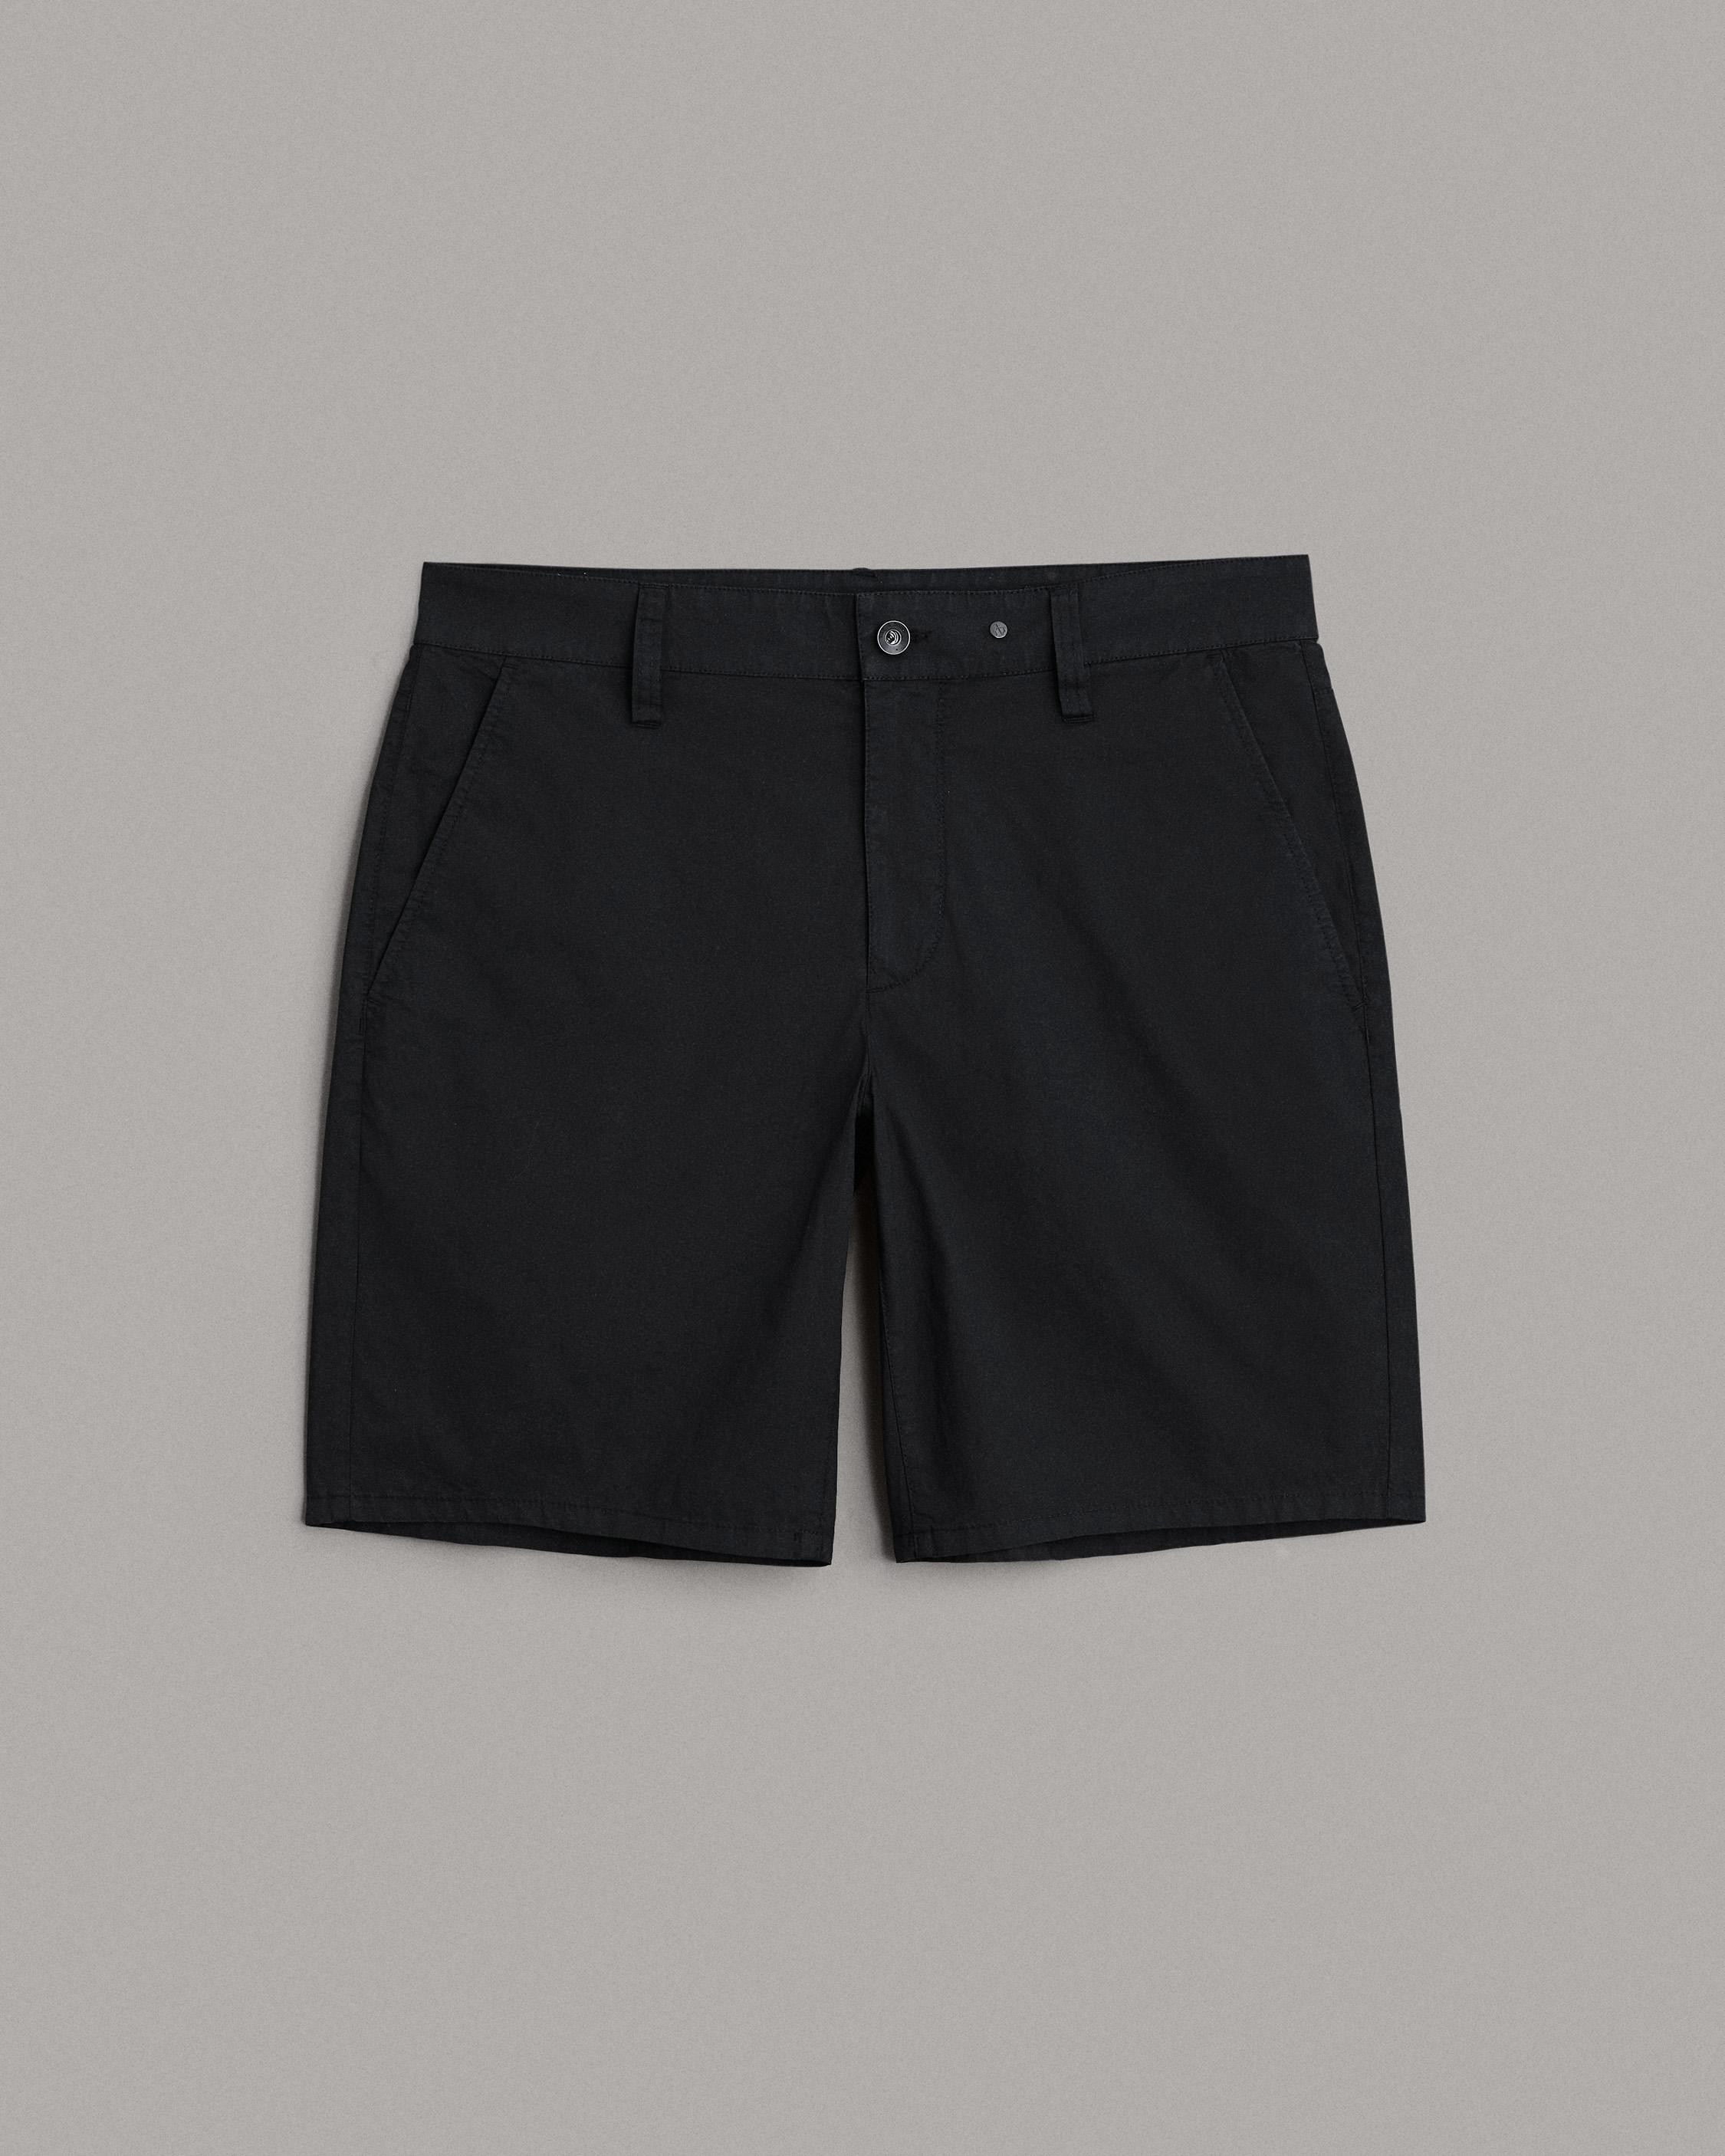 Shop Shorts for Men in Various Styles | rag & bone